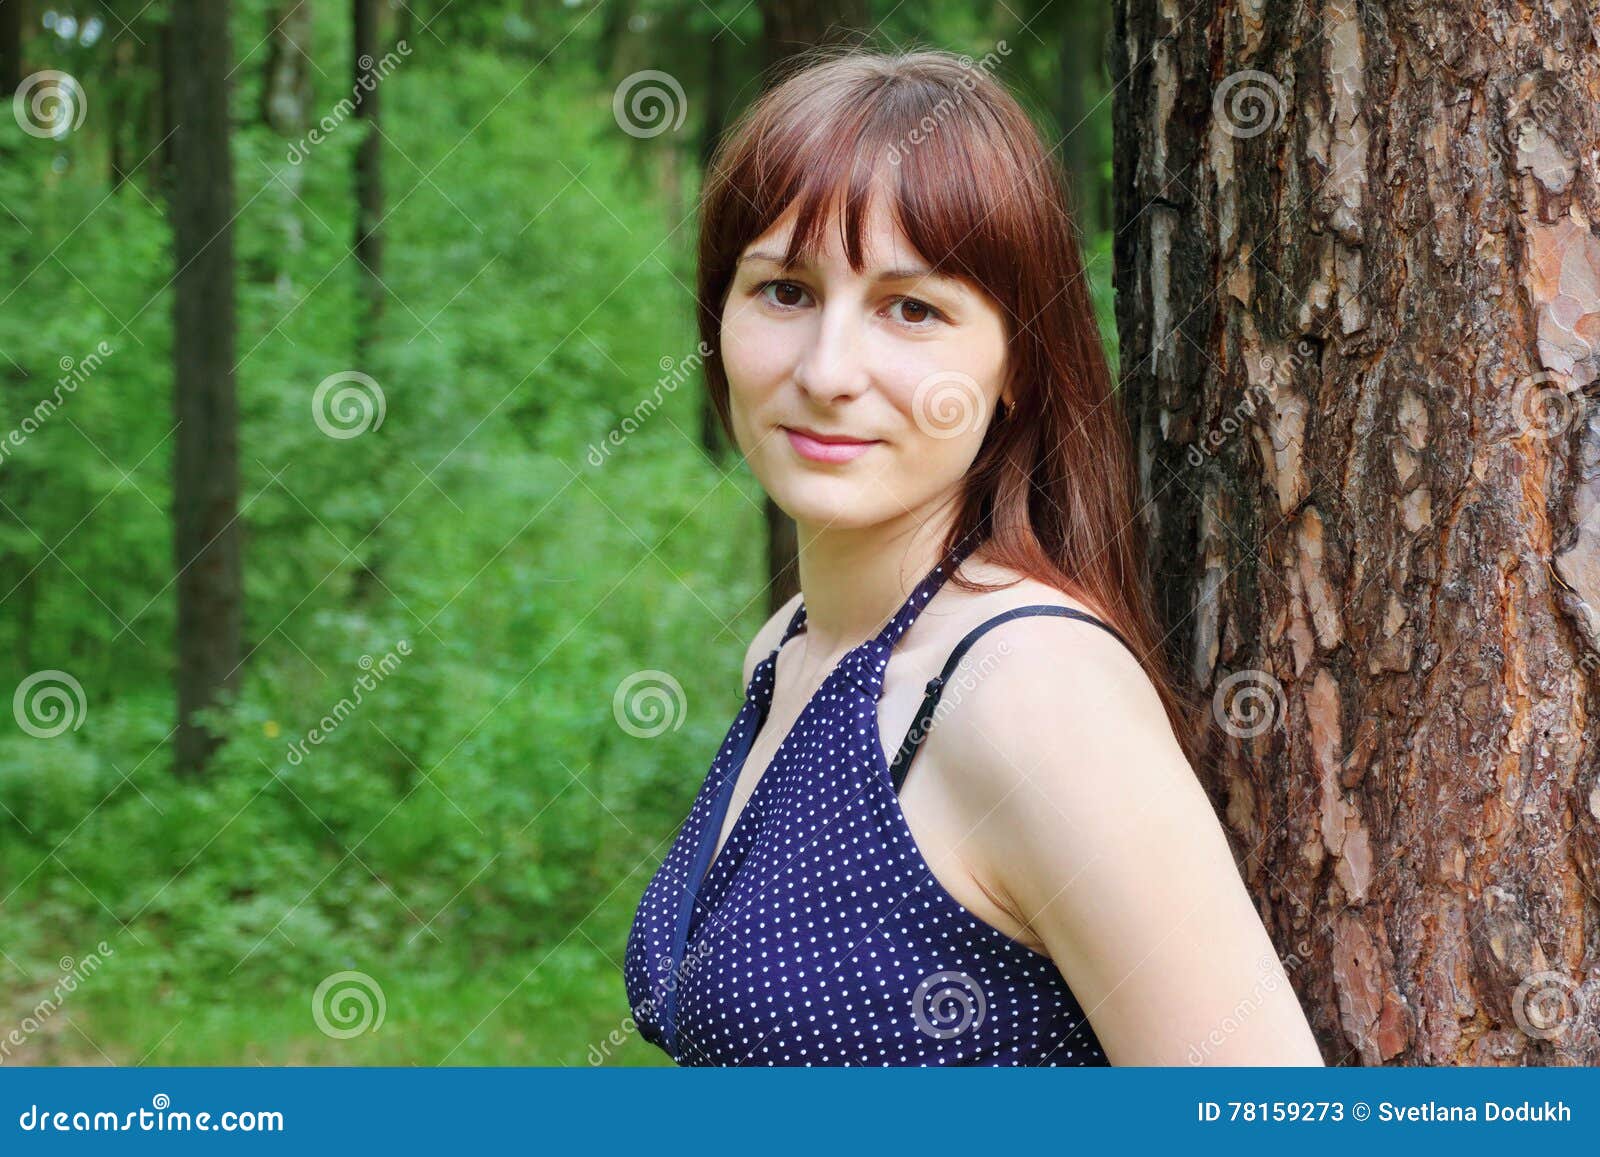 Royalty-Free photo: Girl wearing red dress near trees | PickPik